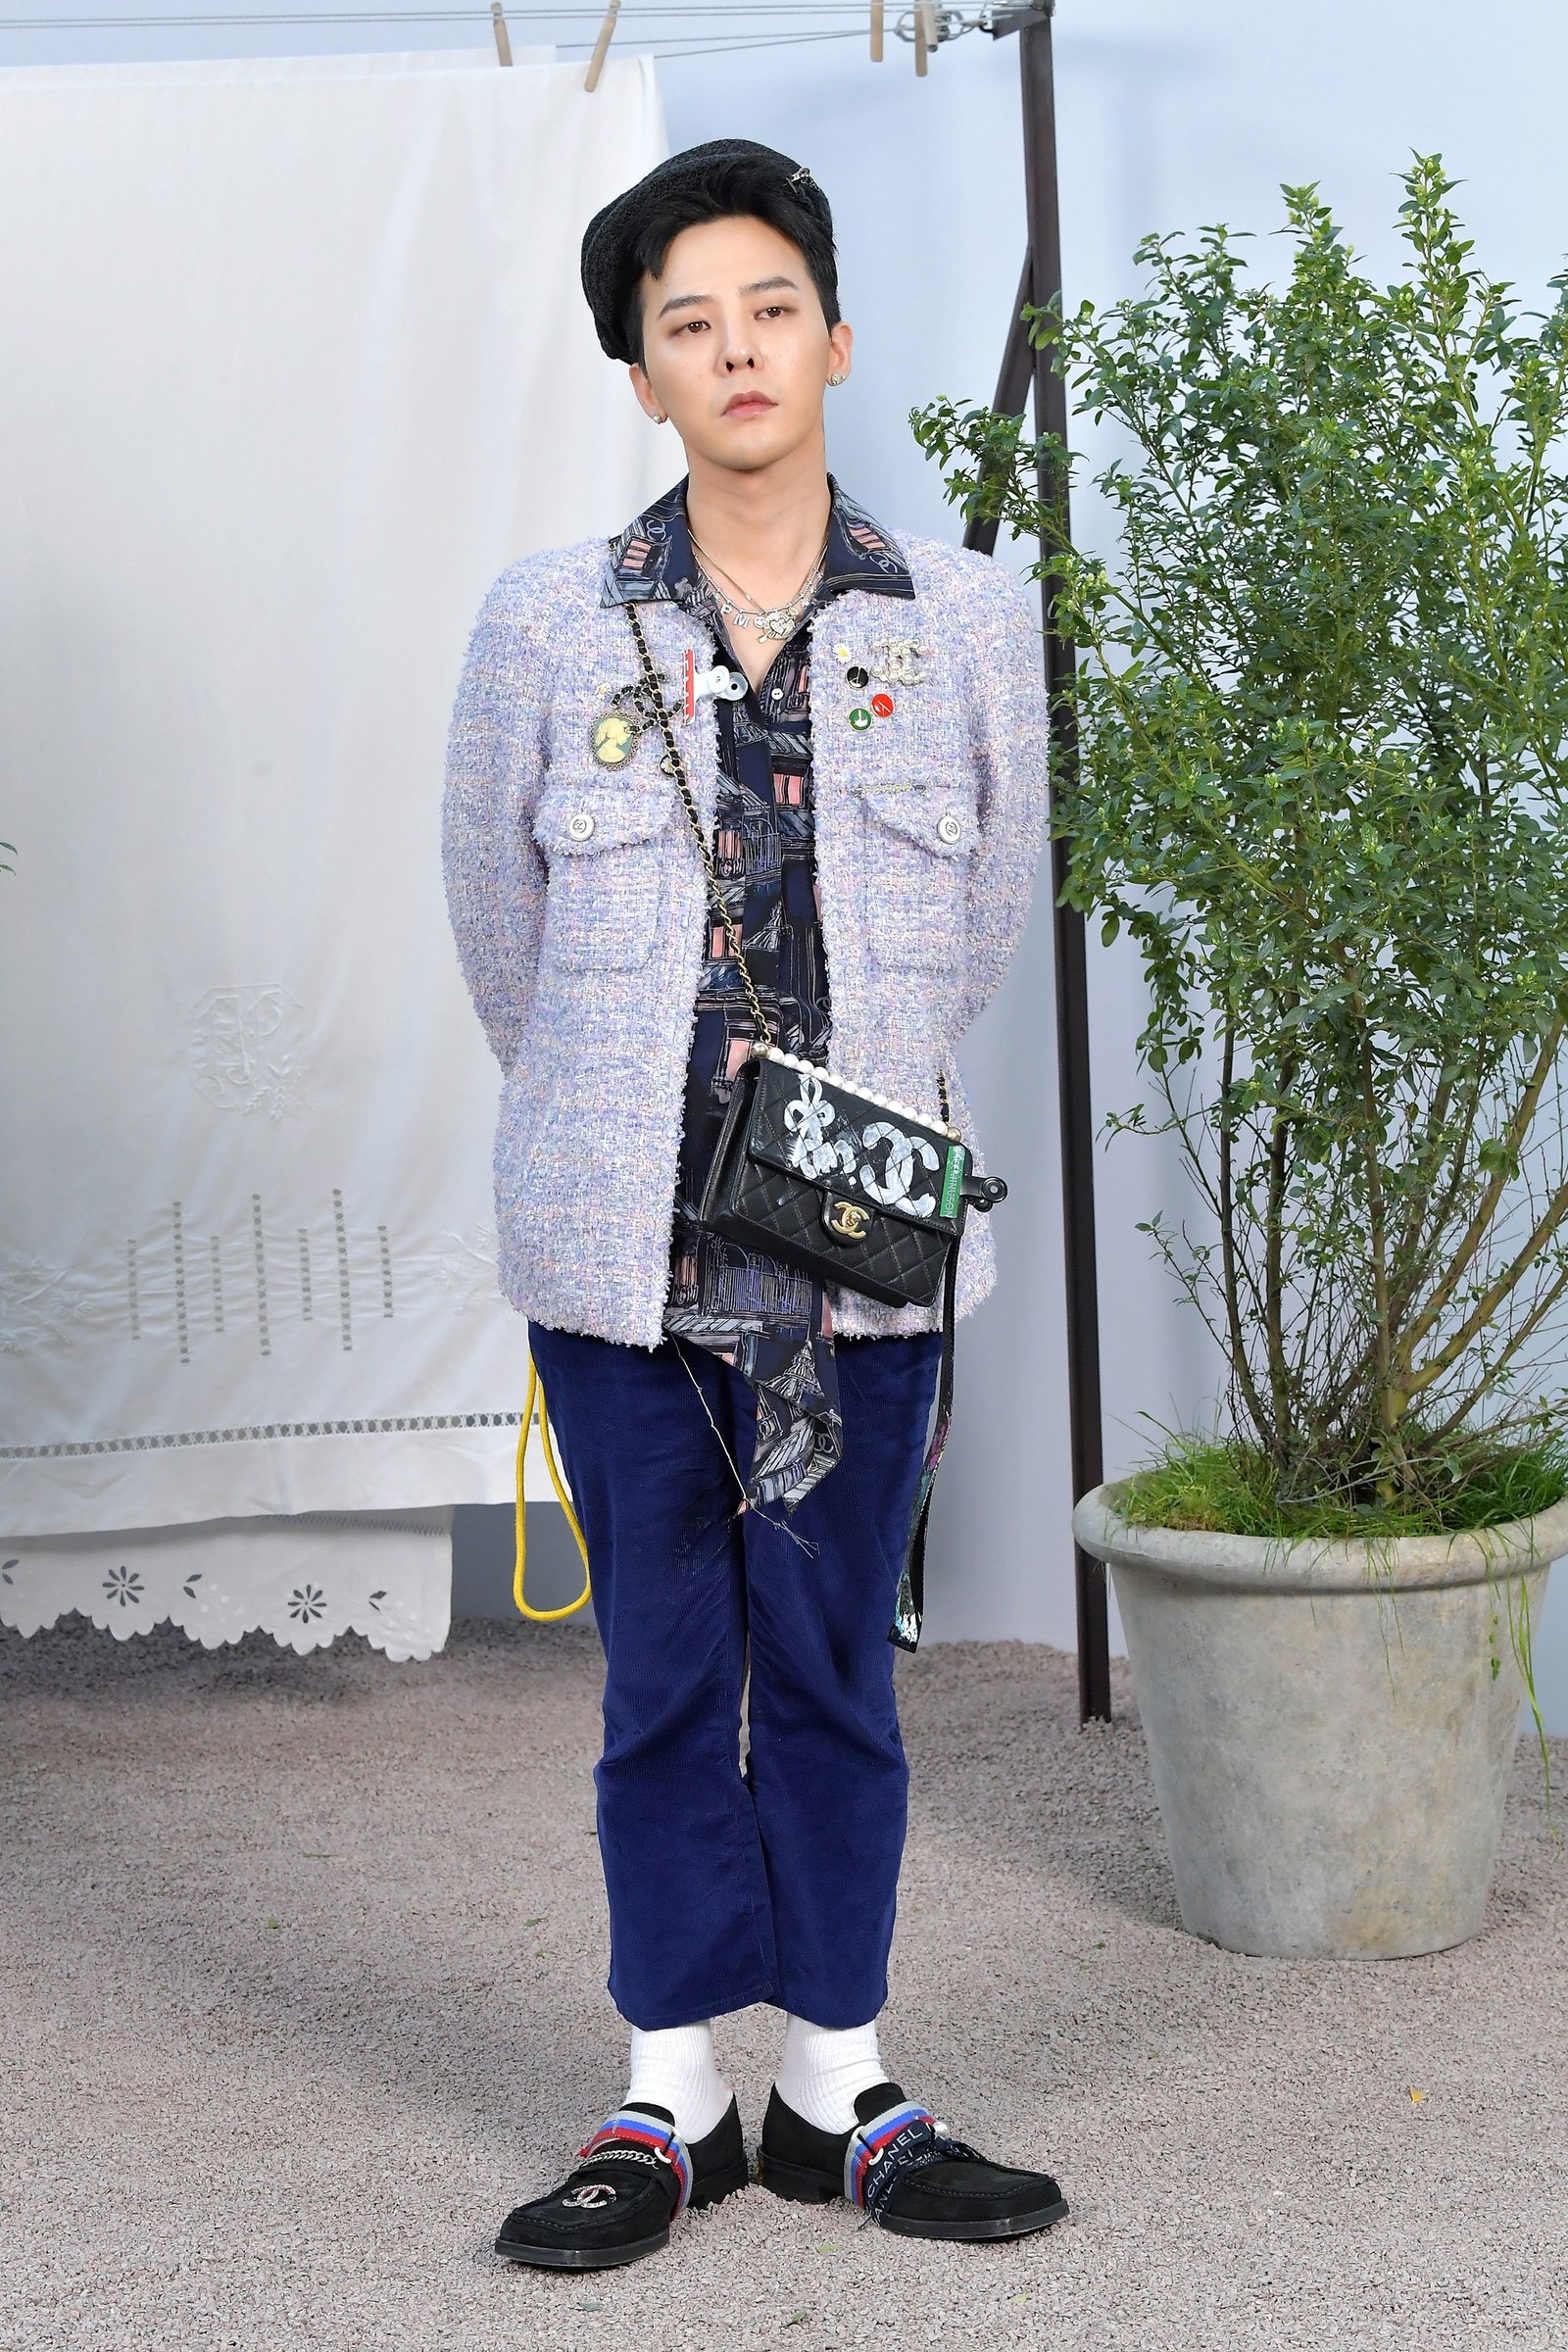 G-Dragon de Big Bang viste ropa de mujer en desfile de Chanel para Paris  Fashion Week | Kwon Ji Yong | K-pop | VIDEO | Cultura Asiática | La  República